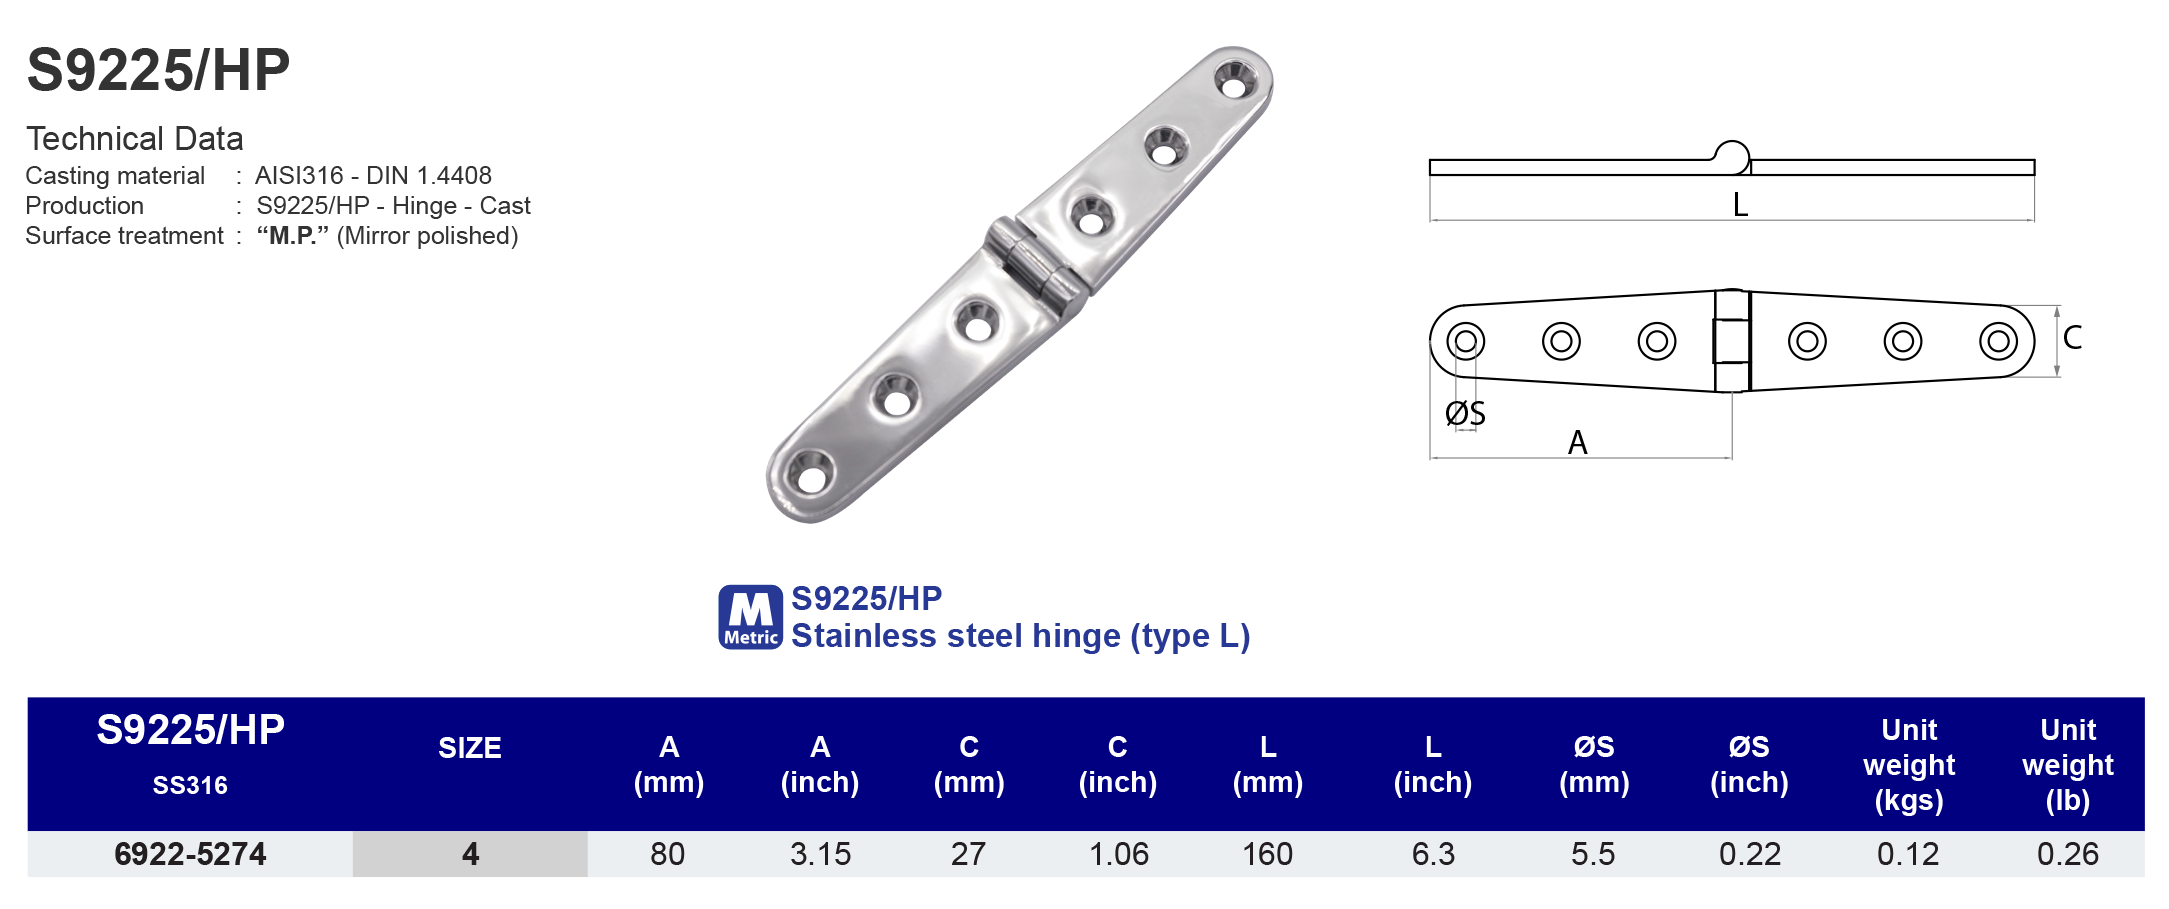 S9225-HP Stainless steel hinge (type L) - 316